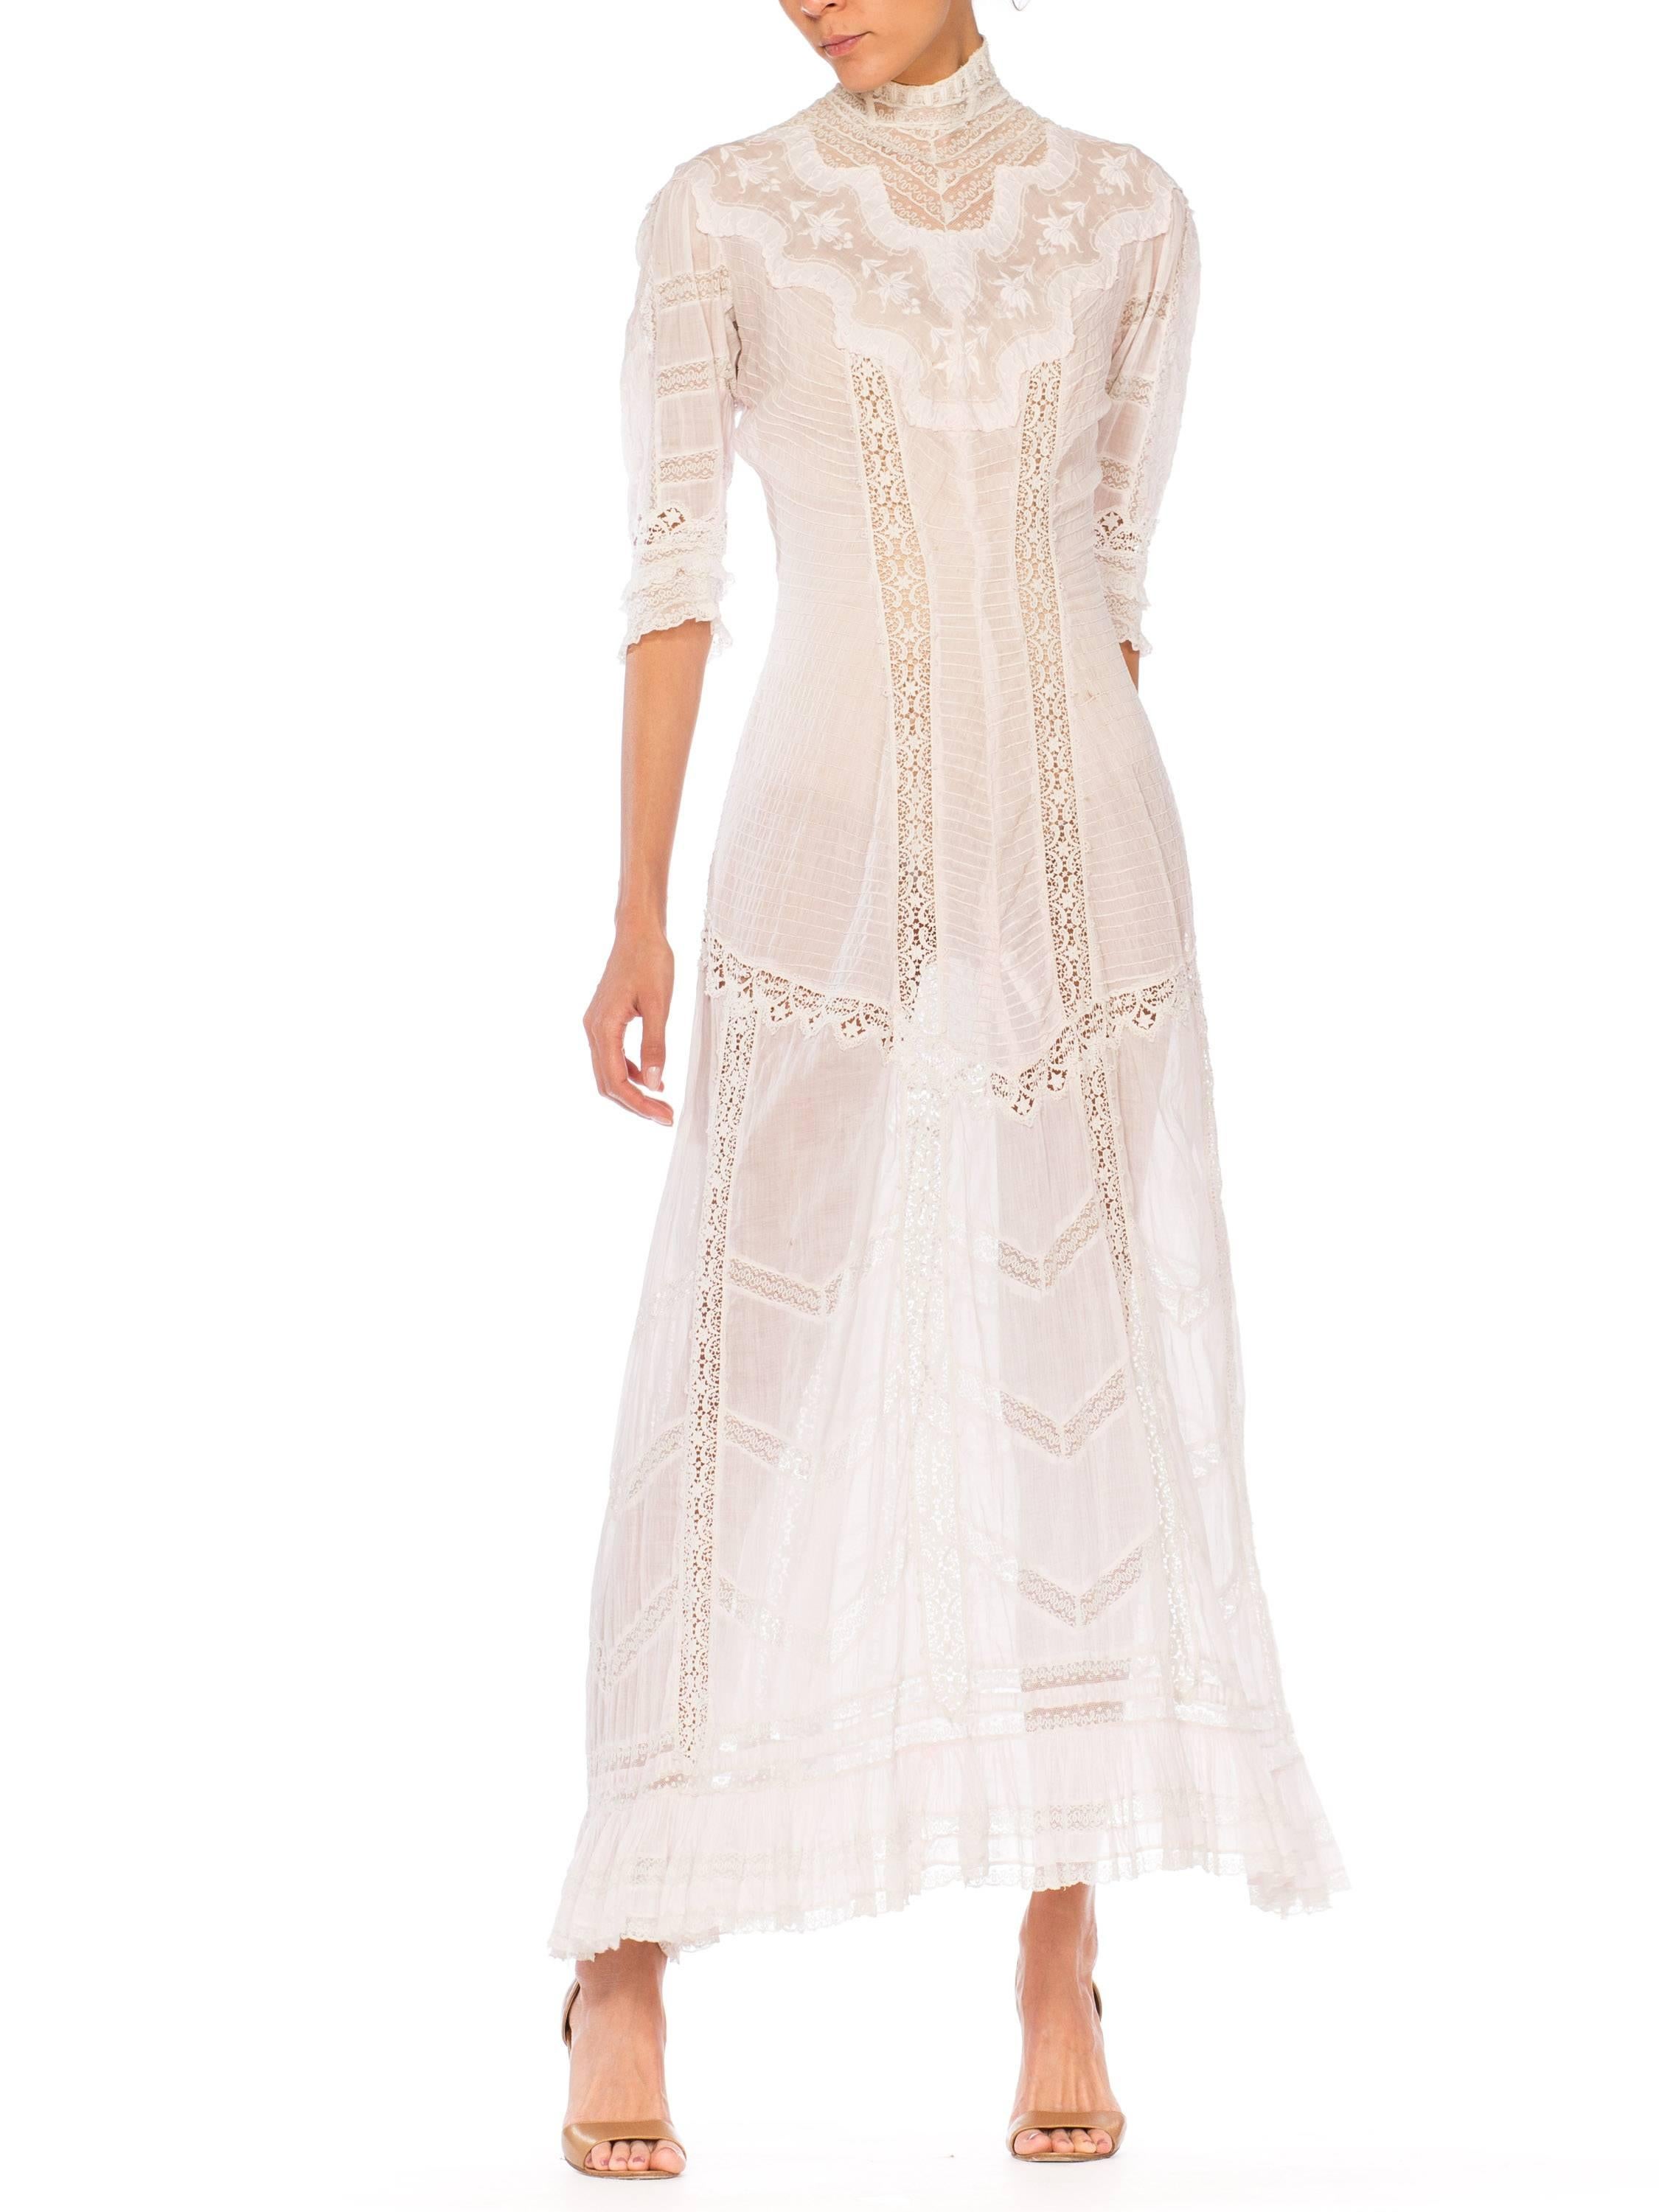 Belle Epoque Swan Neck Princess Line Victorian Organic Cotton and Lace Tea Dress 11